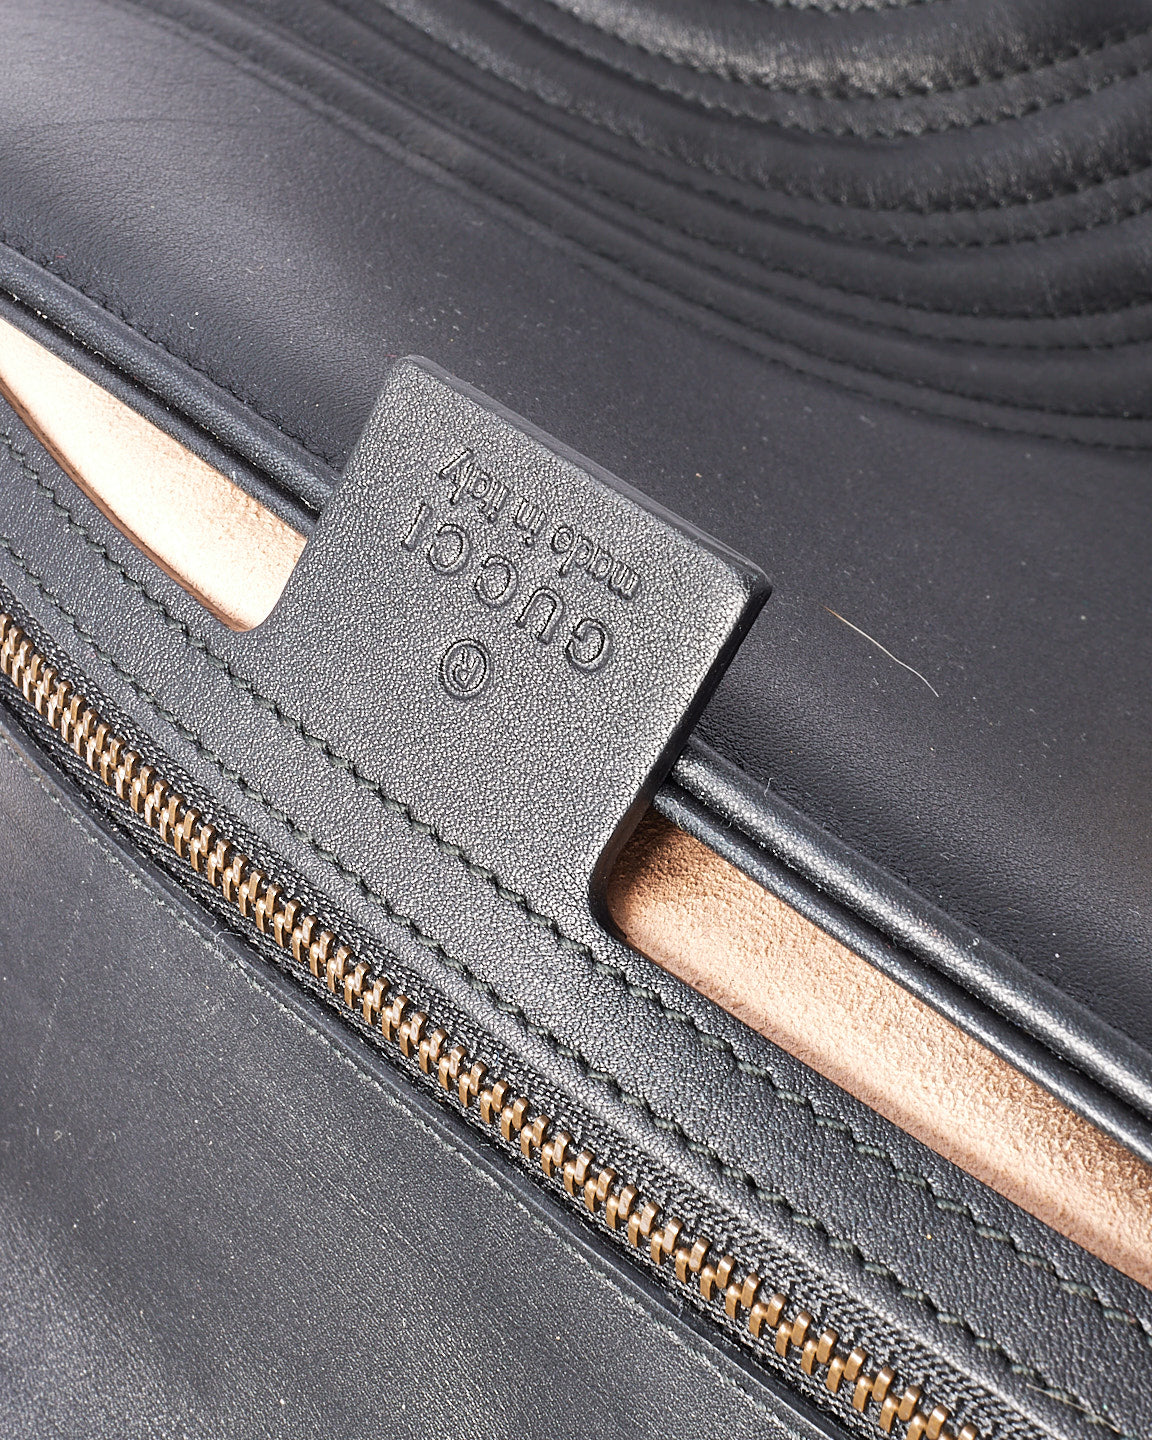 Gucci Black Leather Marmont Medium Flap Shoulder Bag